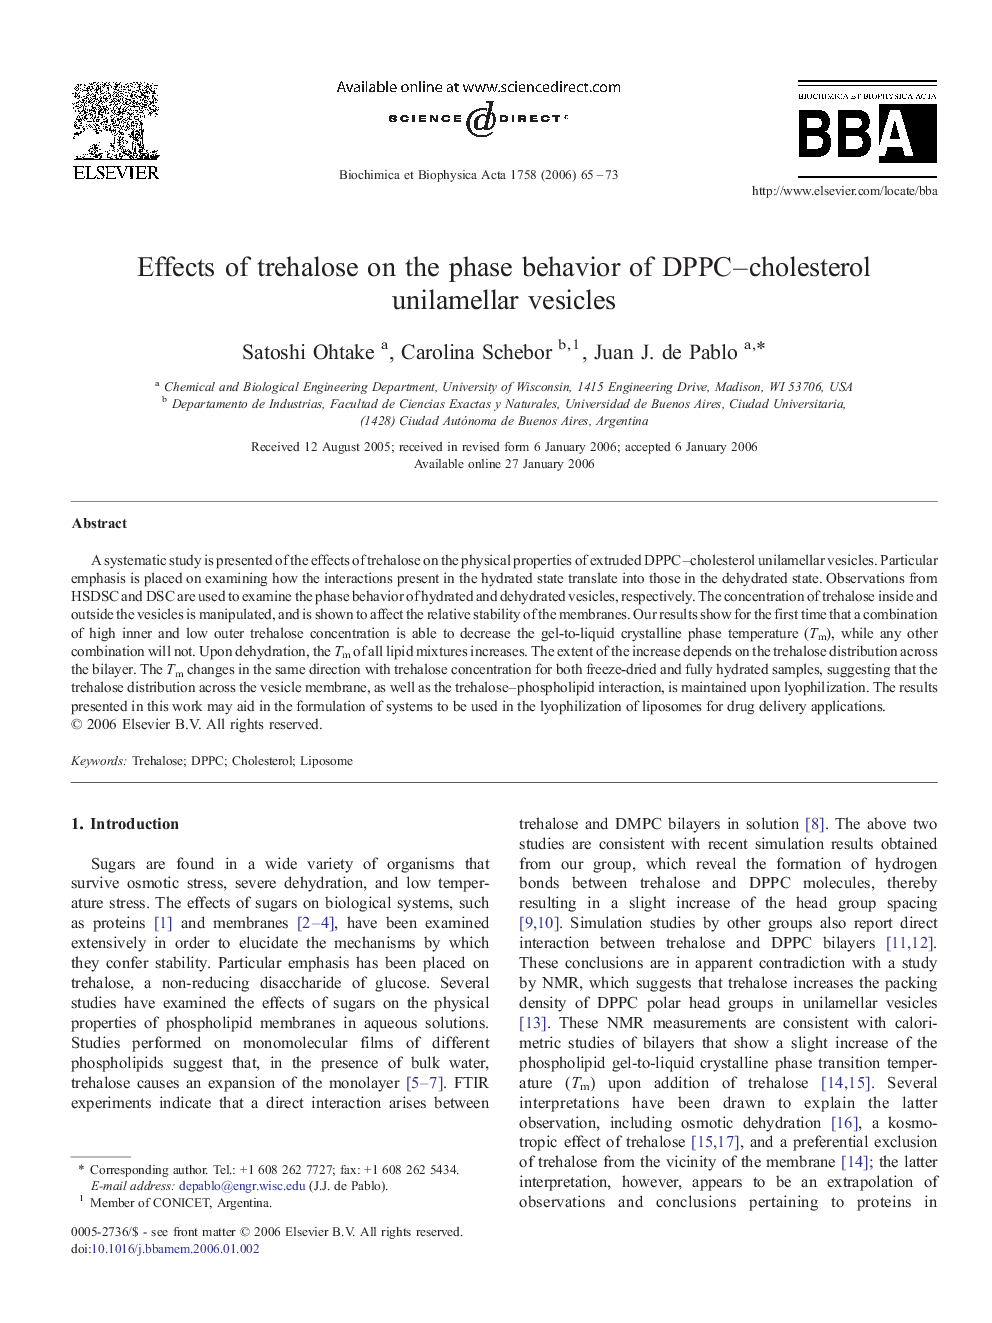 Effects of trehalose on the phase behavior of DPPC–cholesterol unilamellar vesicles